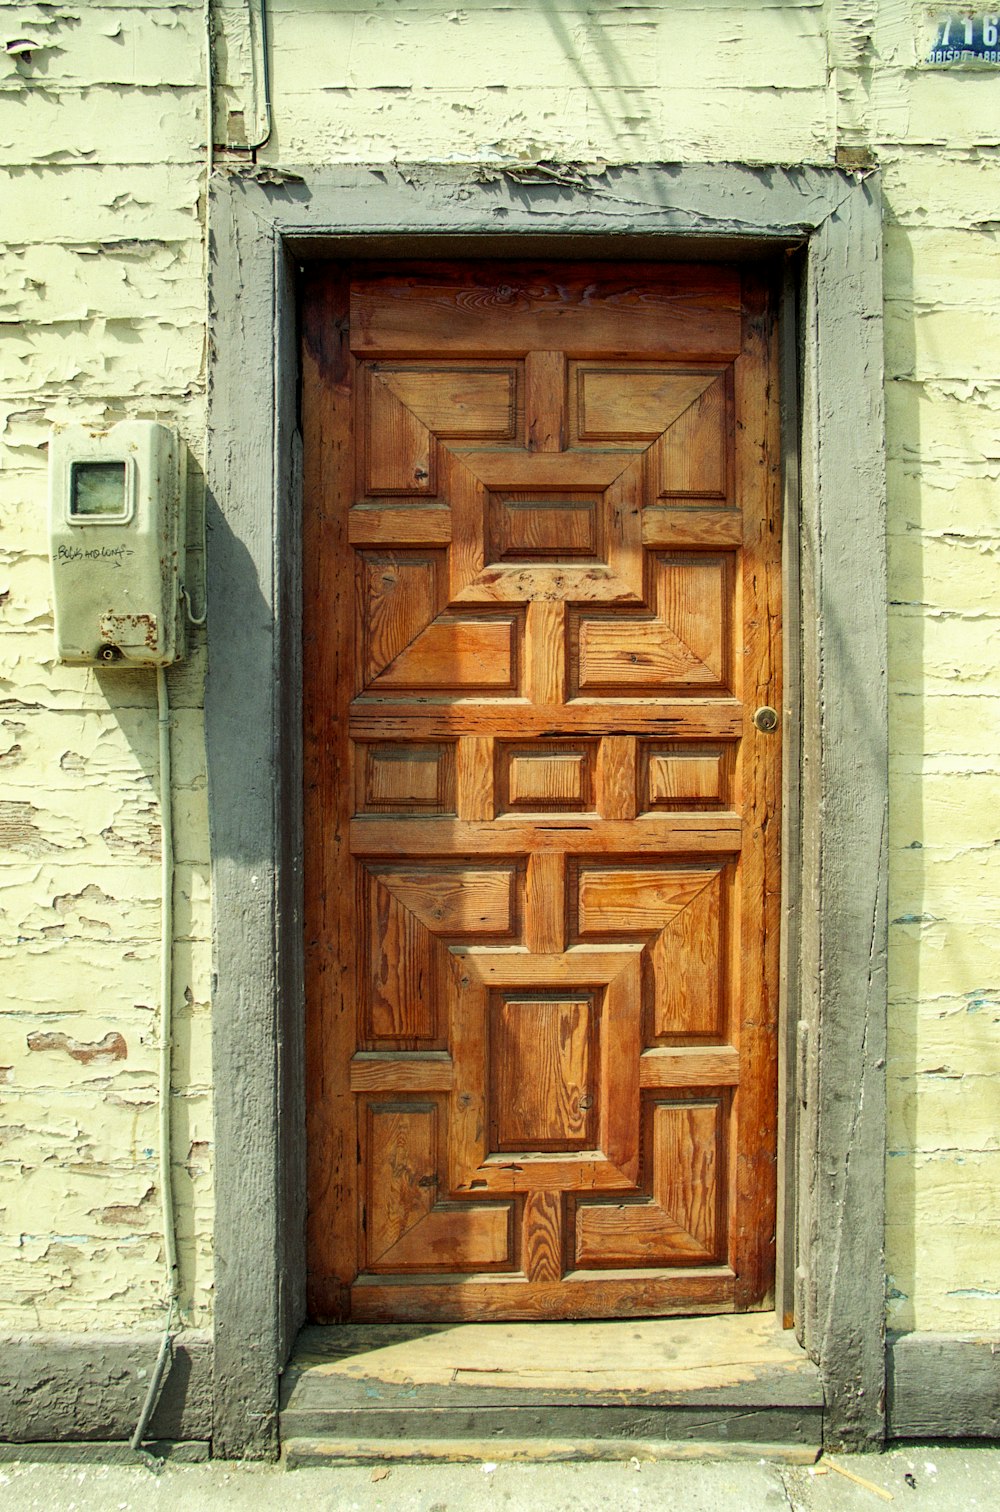 a wooden door on a brick building